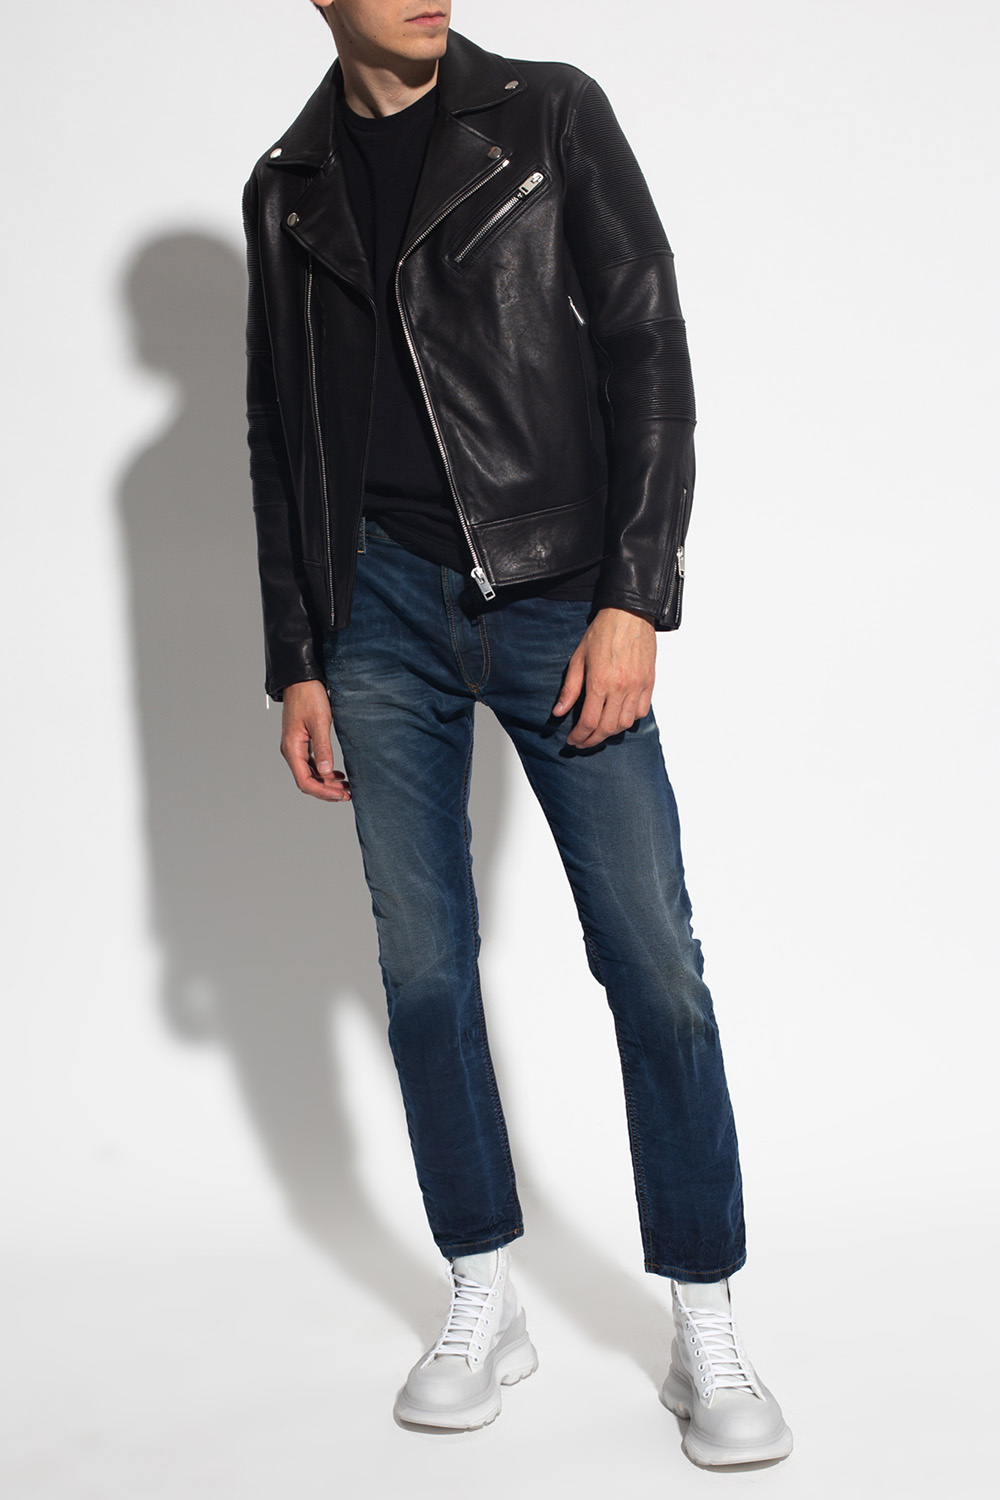 Diesel ‘Krooley Jogg’ jeans | Men's Clothing | Vitkac